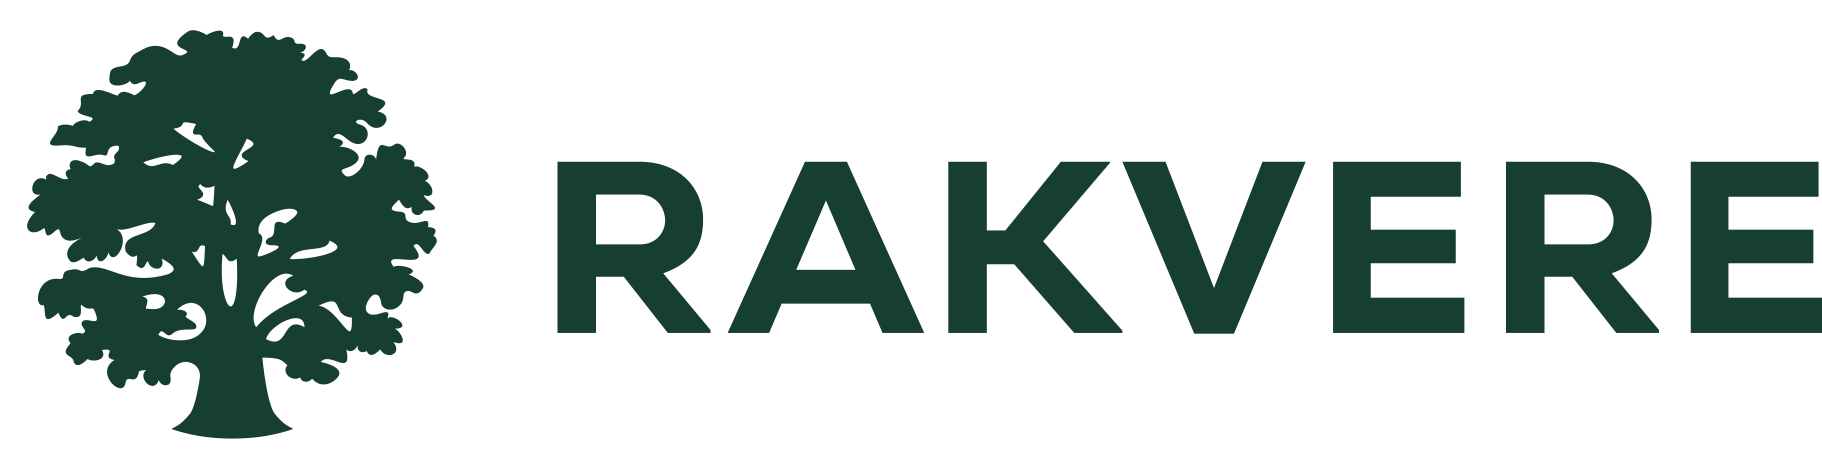 Rakvere_Farmid_logo